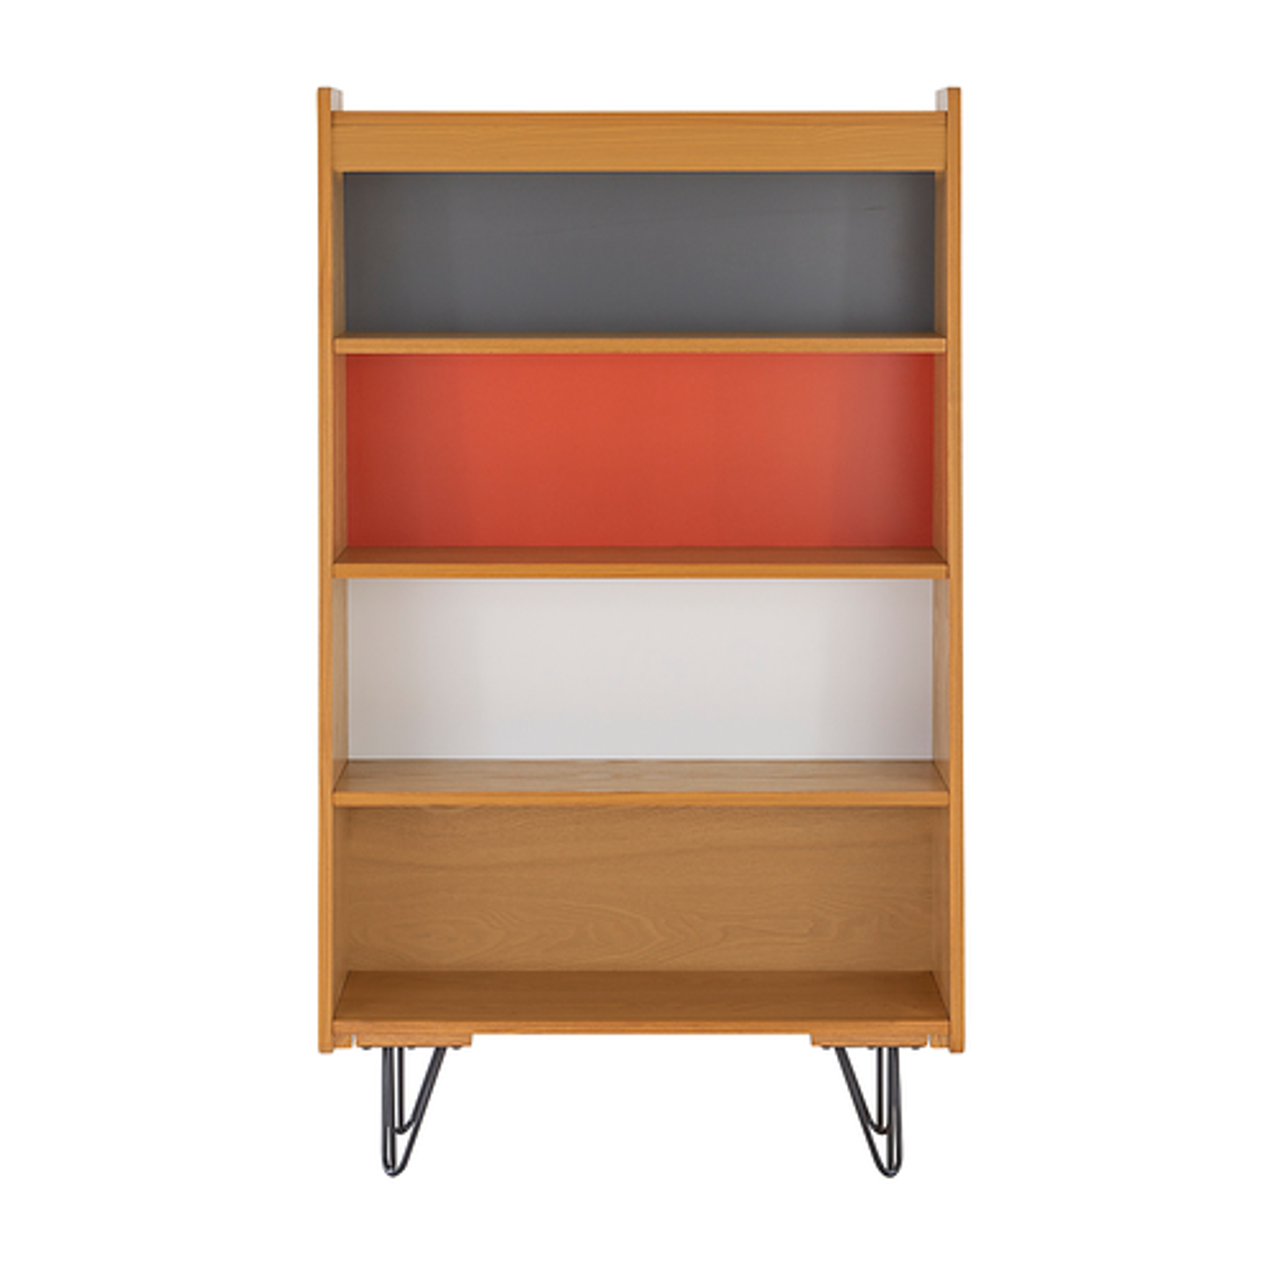 Linon Home Décor - Pollard Bookcase - Natural, Charcoal, Orange, White